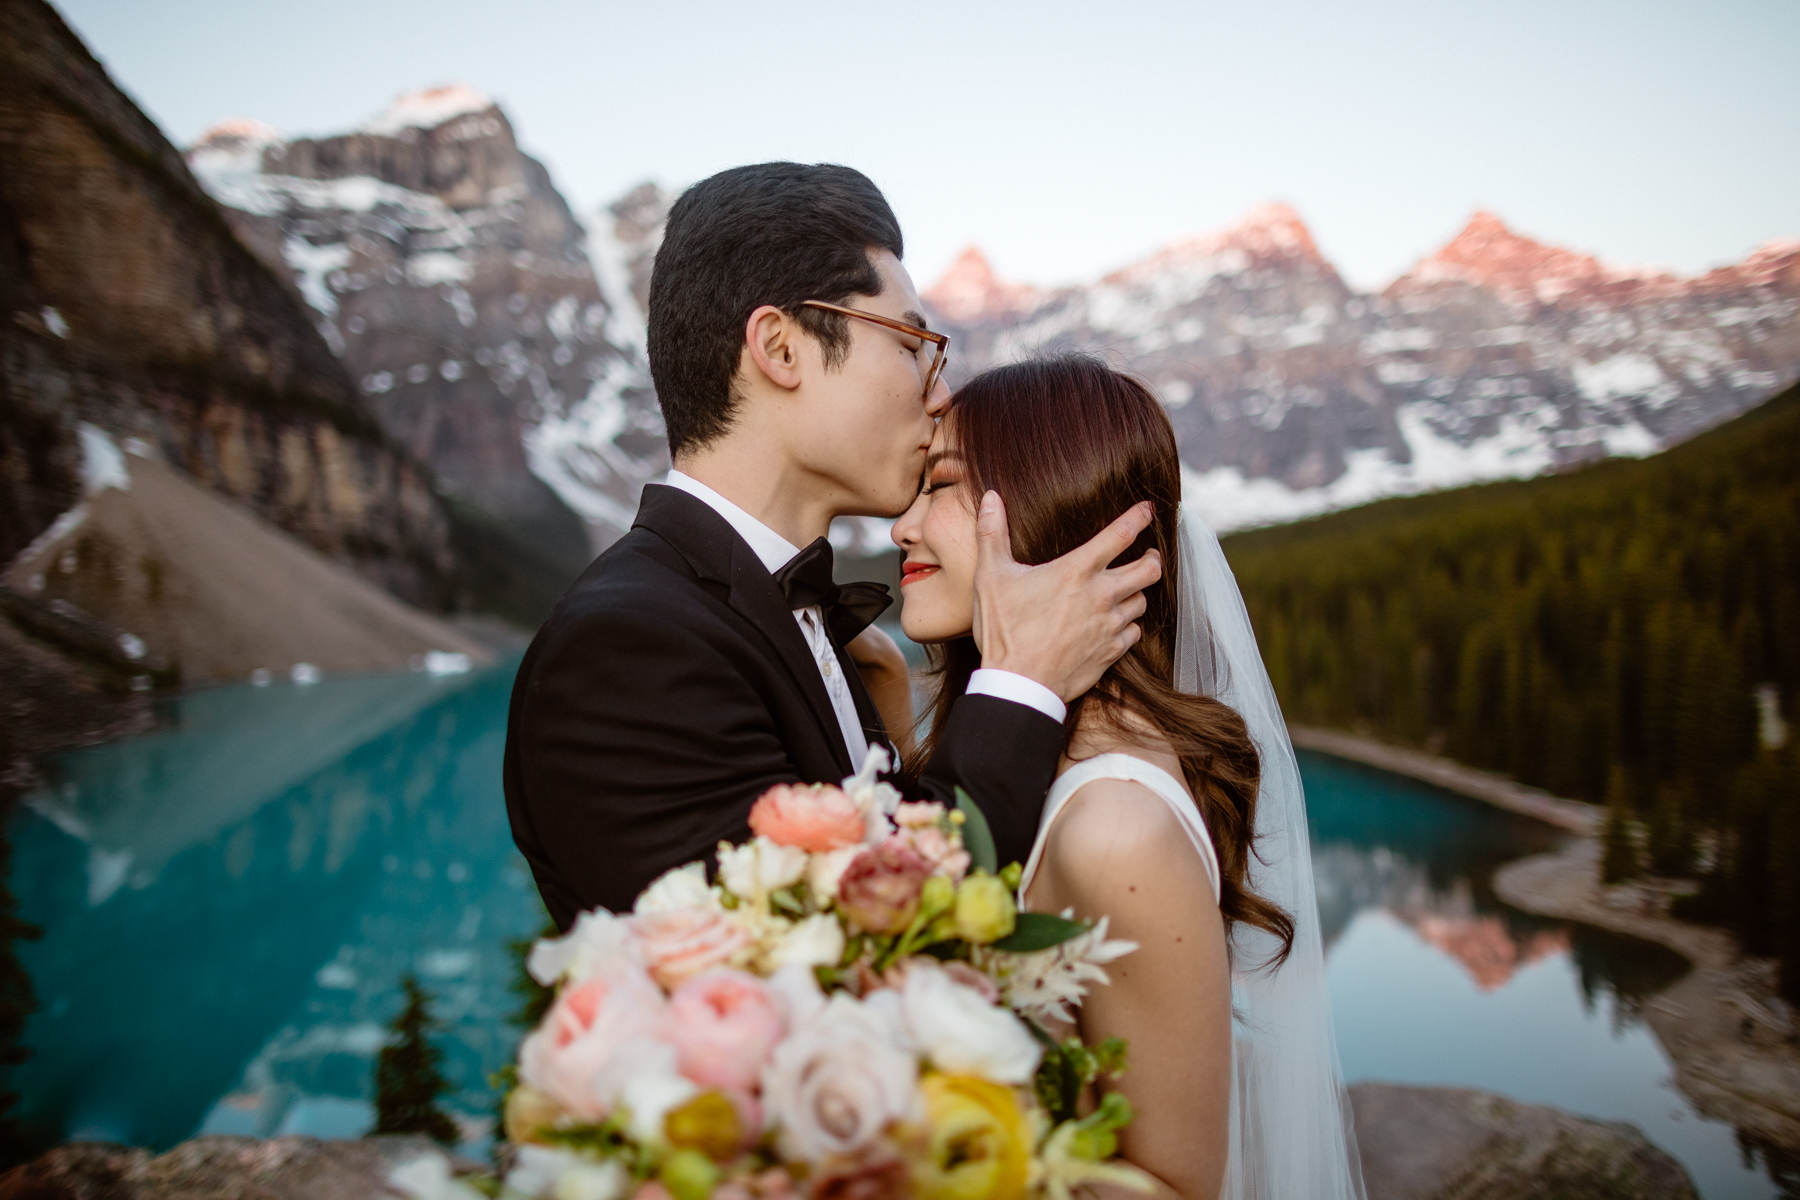 Banff Pre Wedding Photography at Moraine Lake - Photo 3